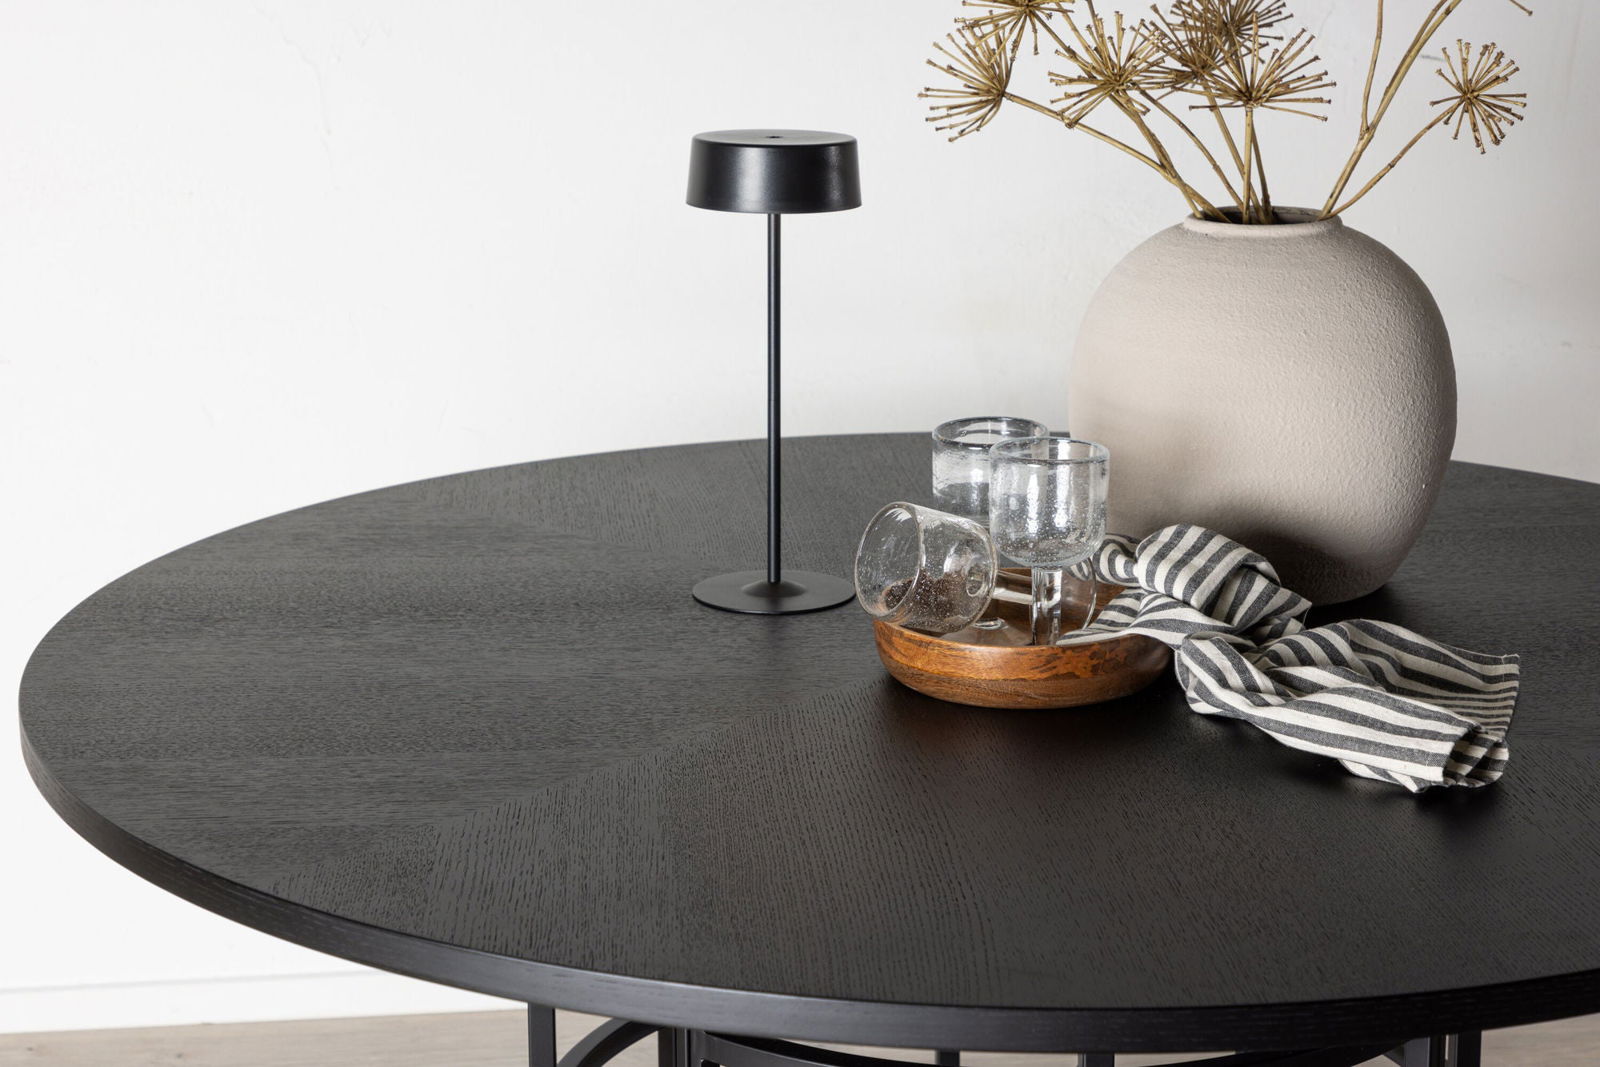 Copenhagen - Dining Table round - Black / Black - vivahabitat.com